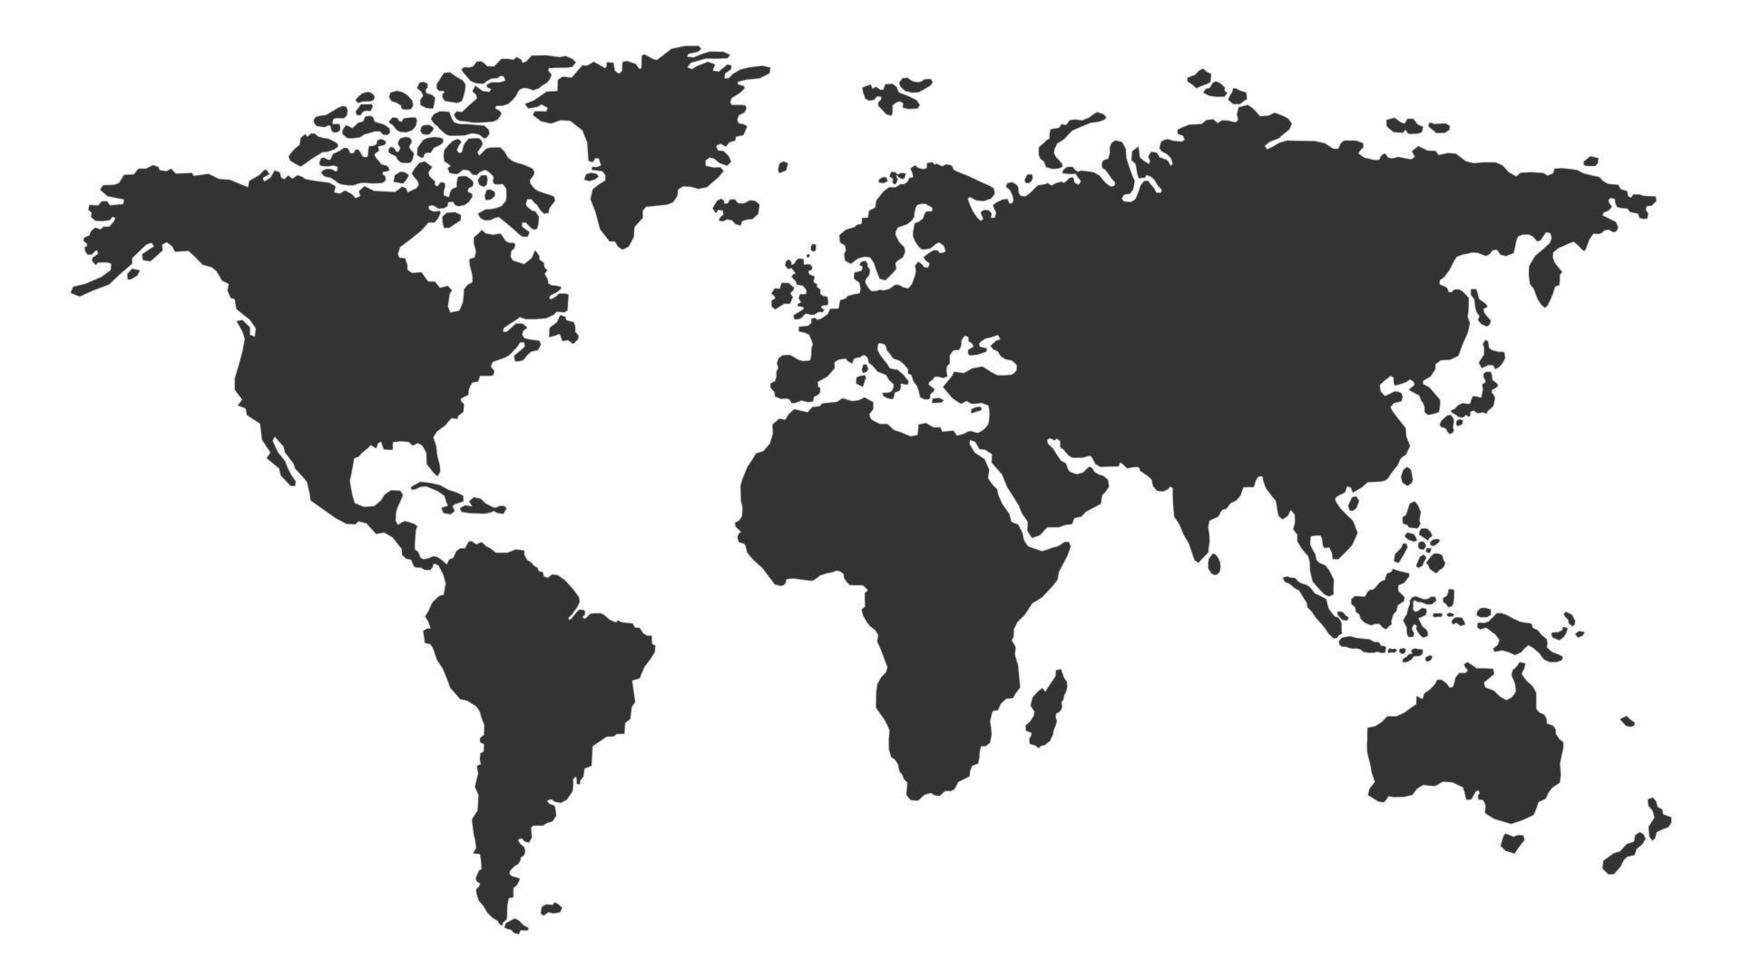 World map vector. Flat Earth map vector. World map vector illustration. Globe similar world map icon. Map silhouette.